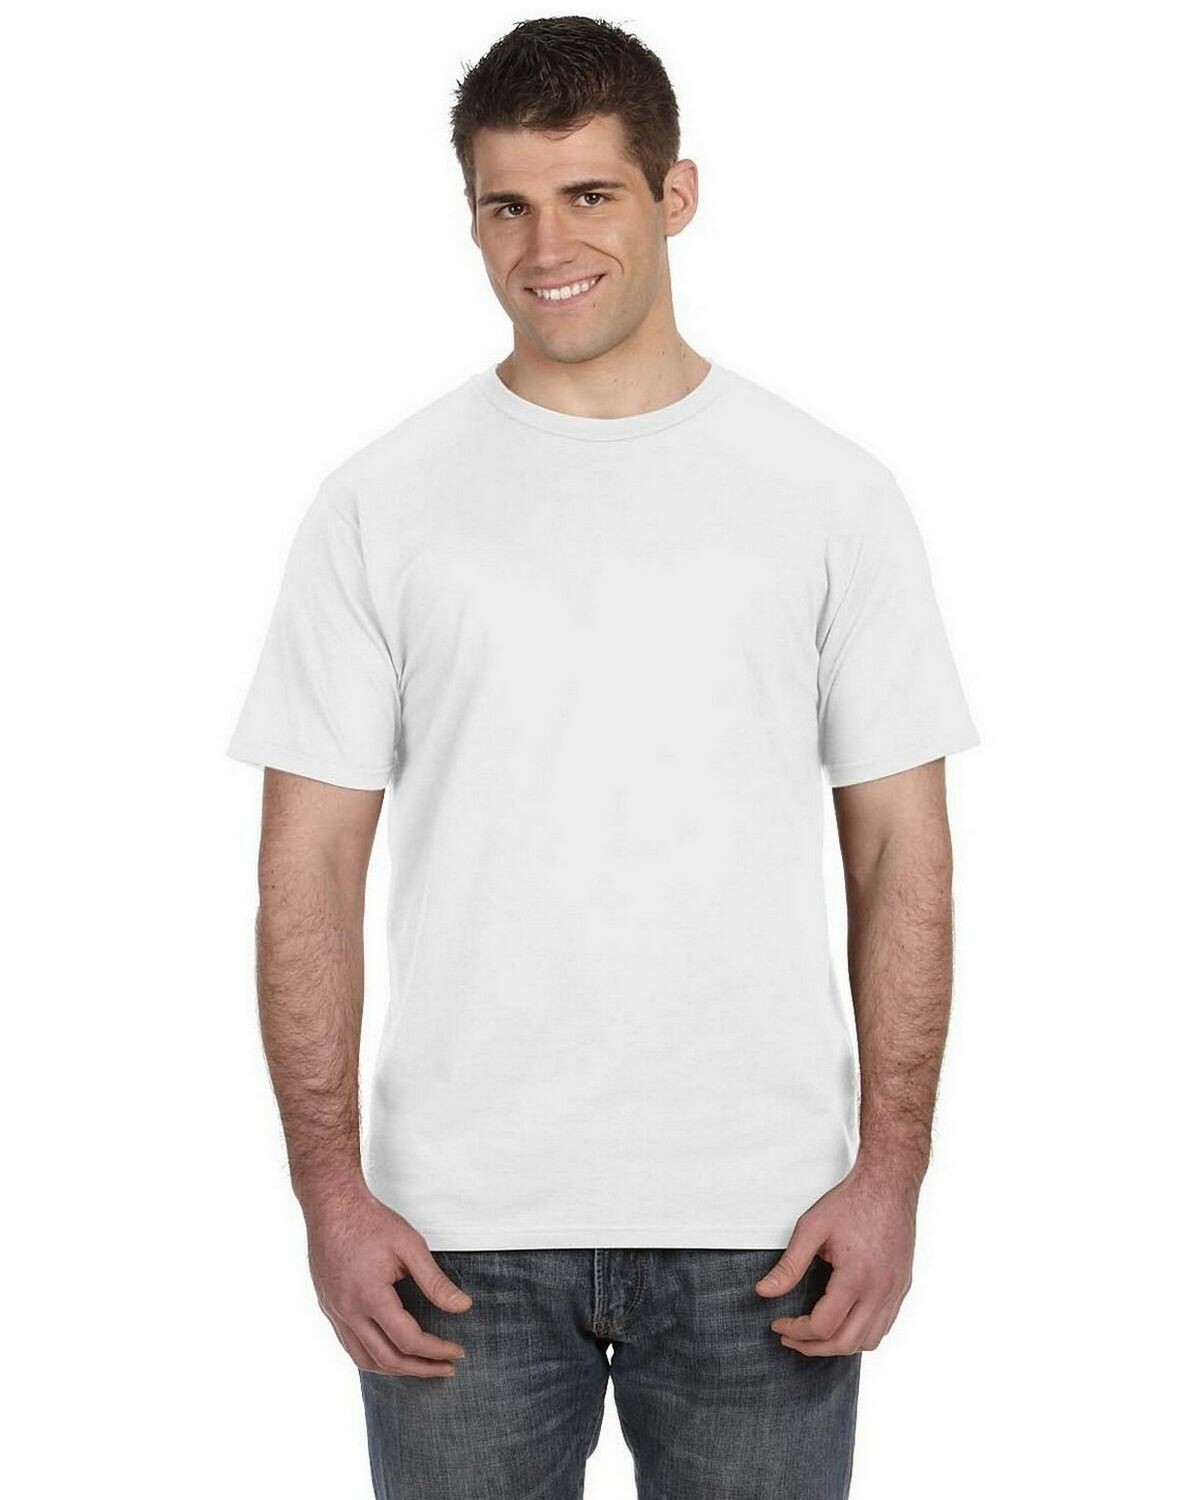 6 Pack: Cricut® White Blank Youth Crew Neck T-Shirt 